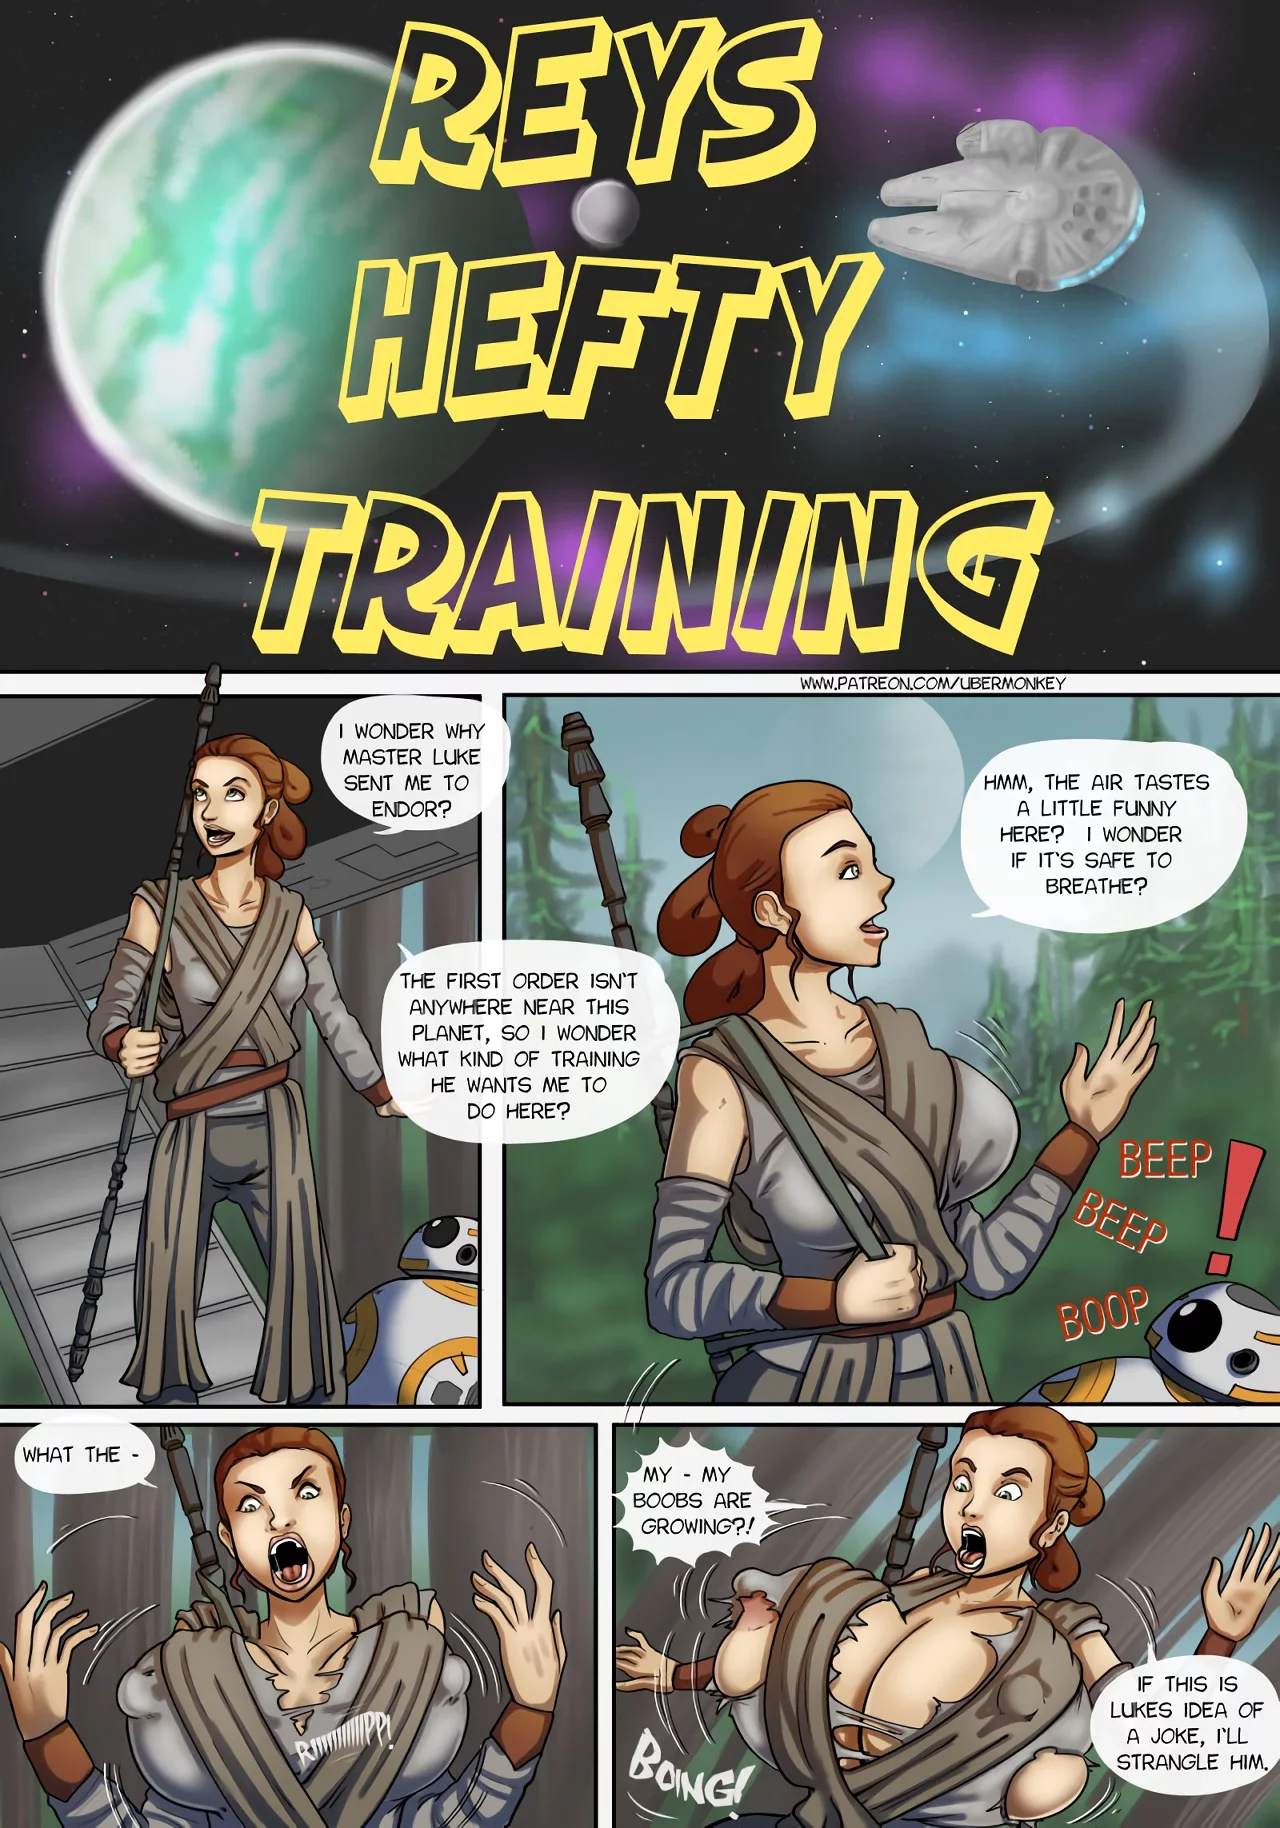 Star Wars Ray Porn - UberMonkey Rey's Hefty Training (Star Wars) porn comic